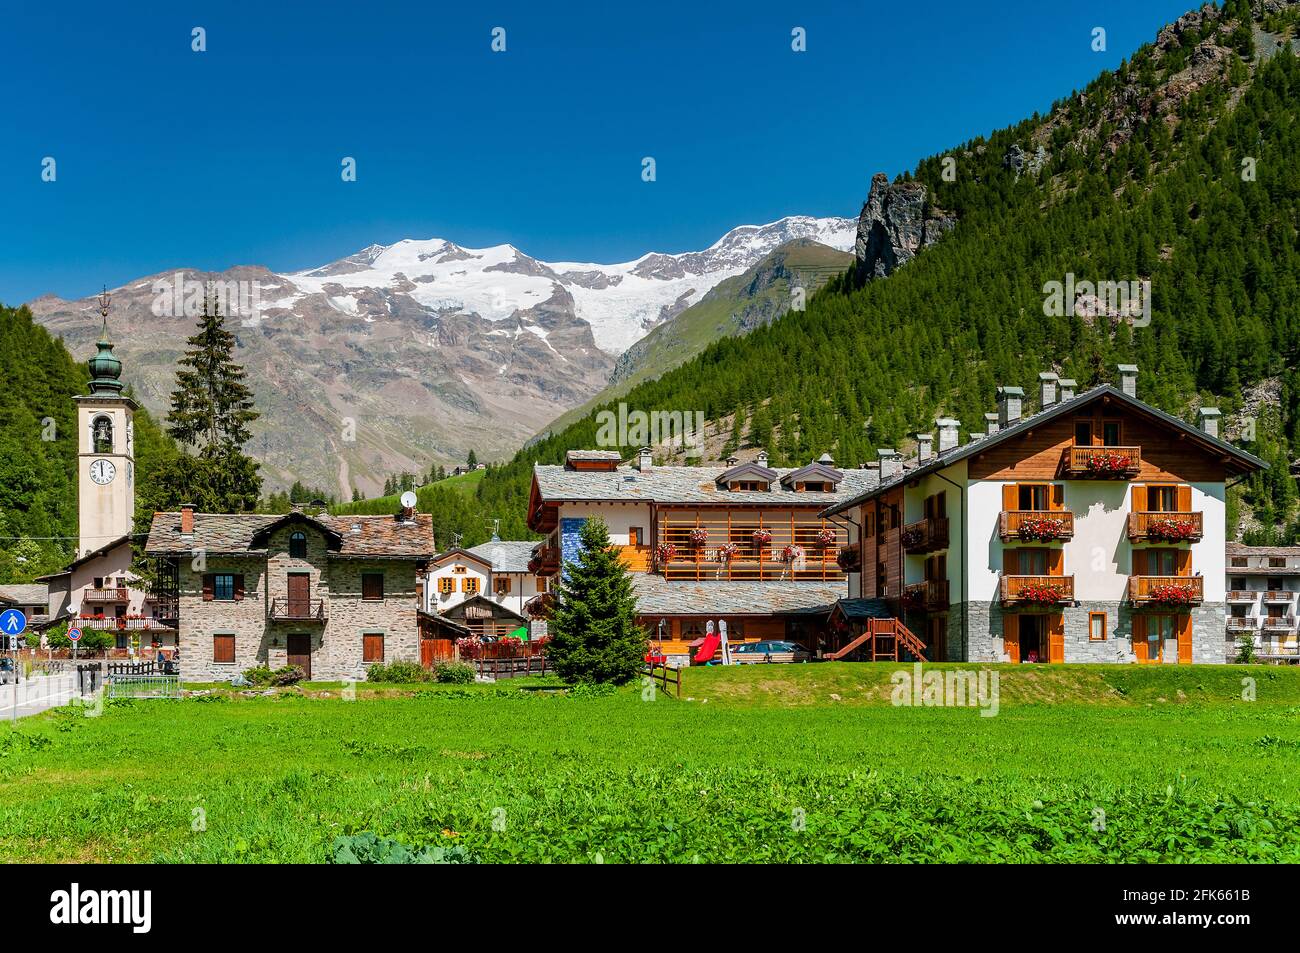 Summer view of Gressoney La Trinite, Aosta Valley, Italy with Mo Stock Photo